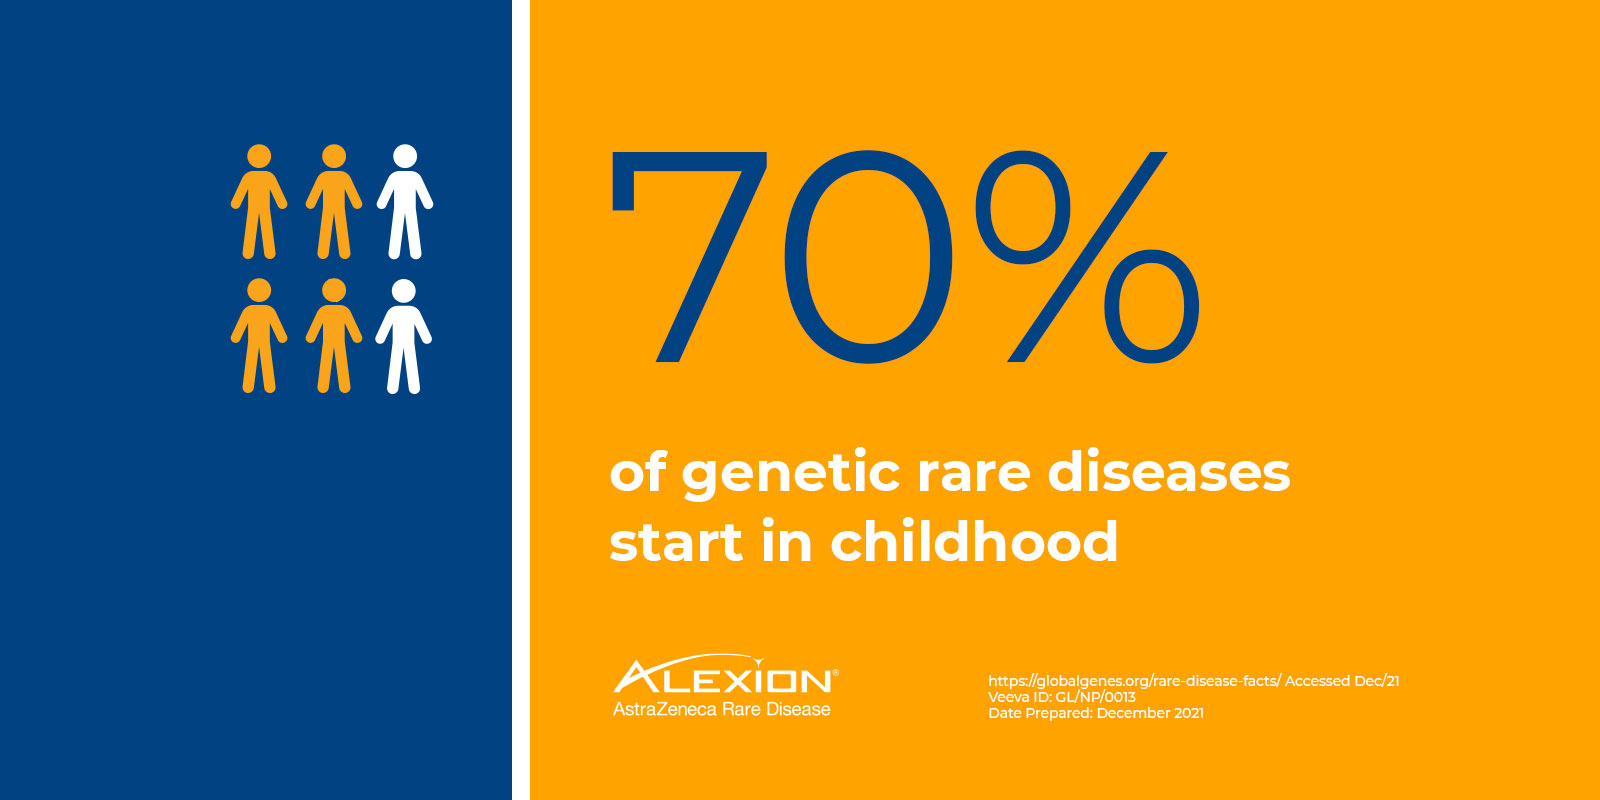 70% of genetic rare diseases start in childhood